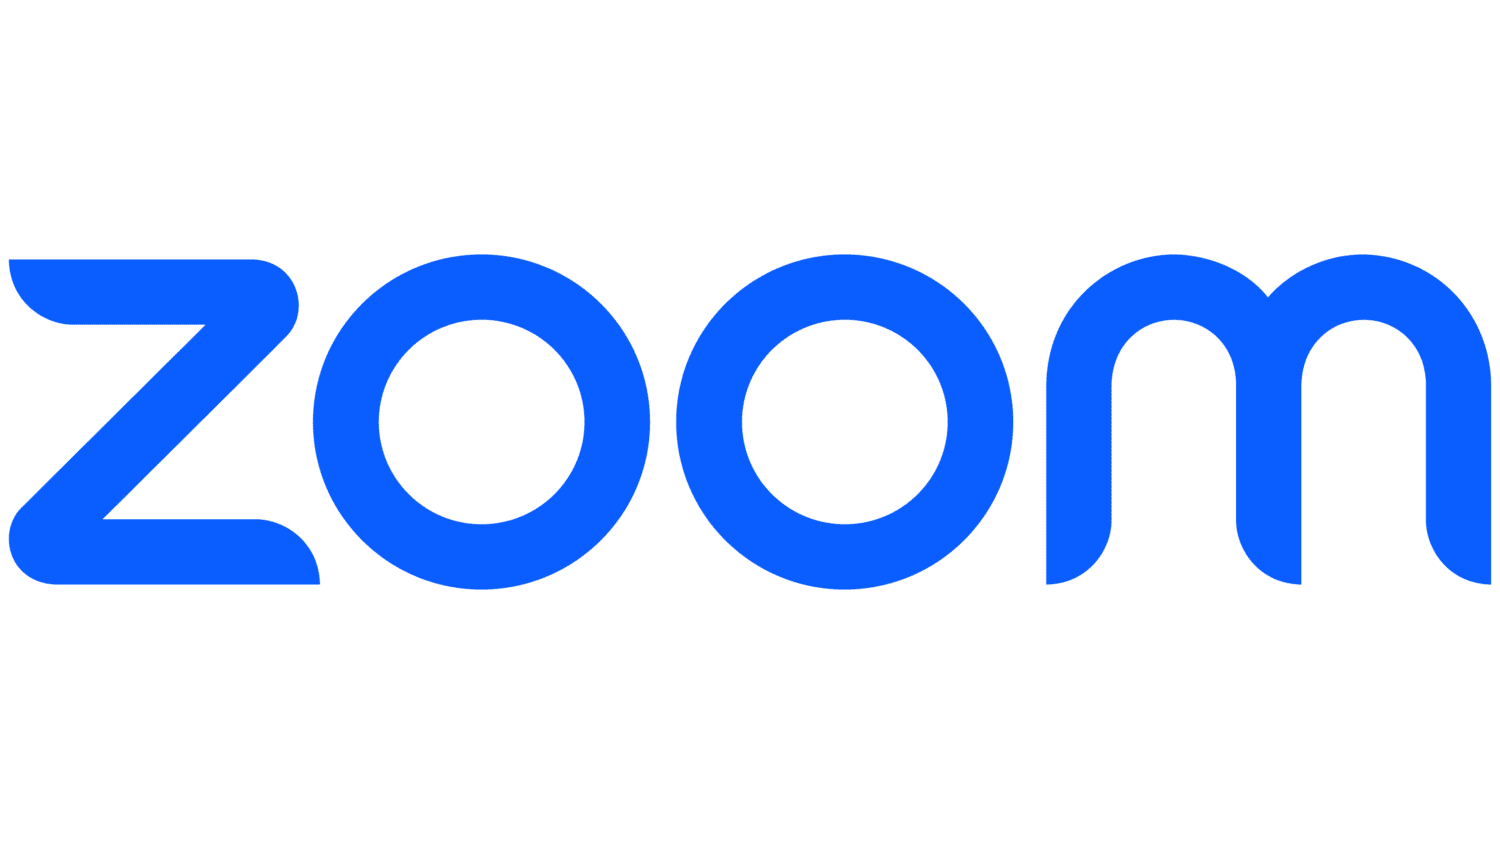 Zoom-Logo-1